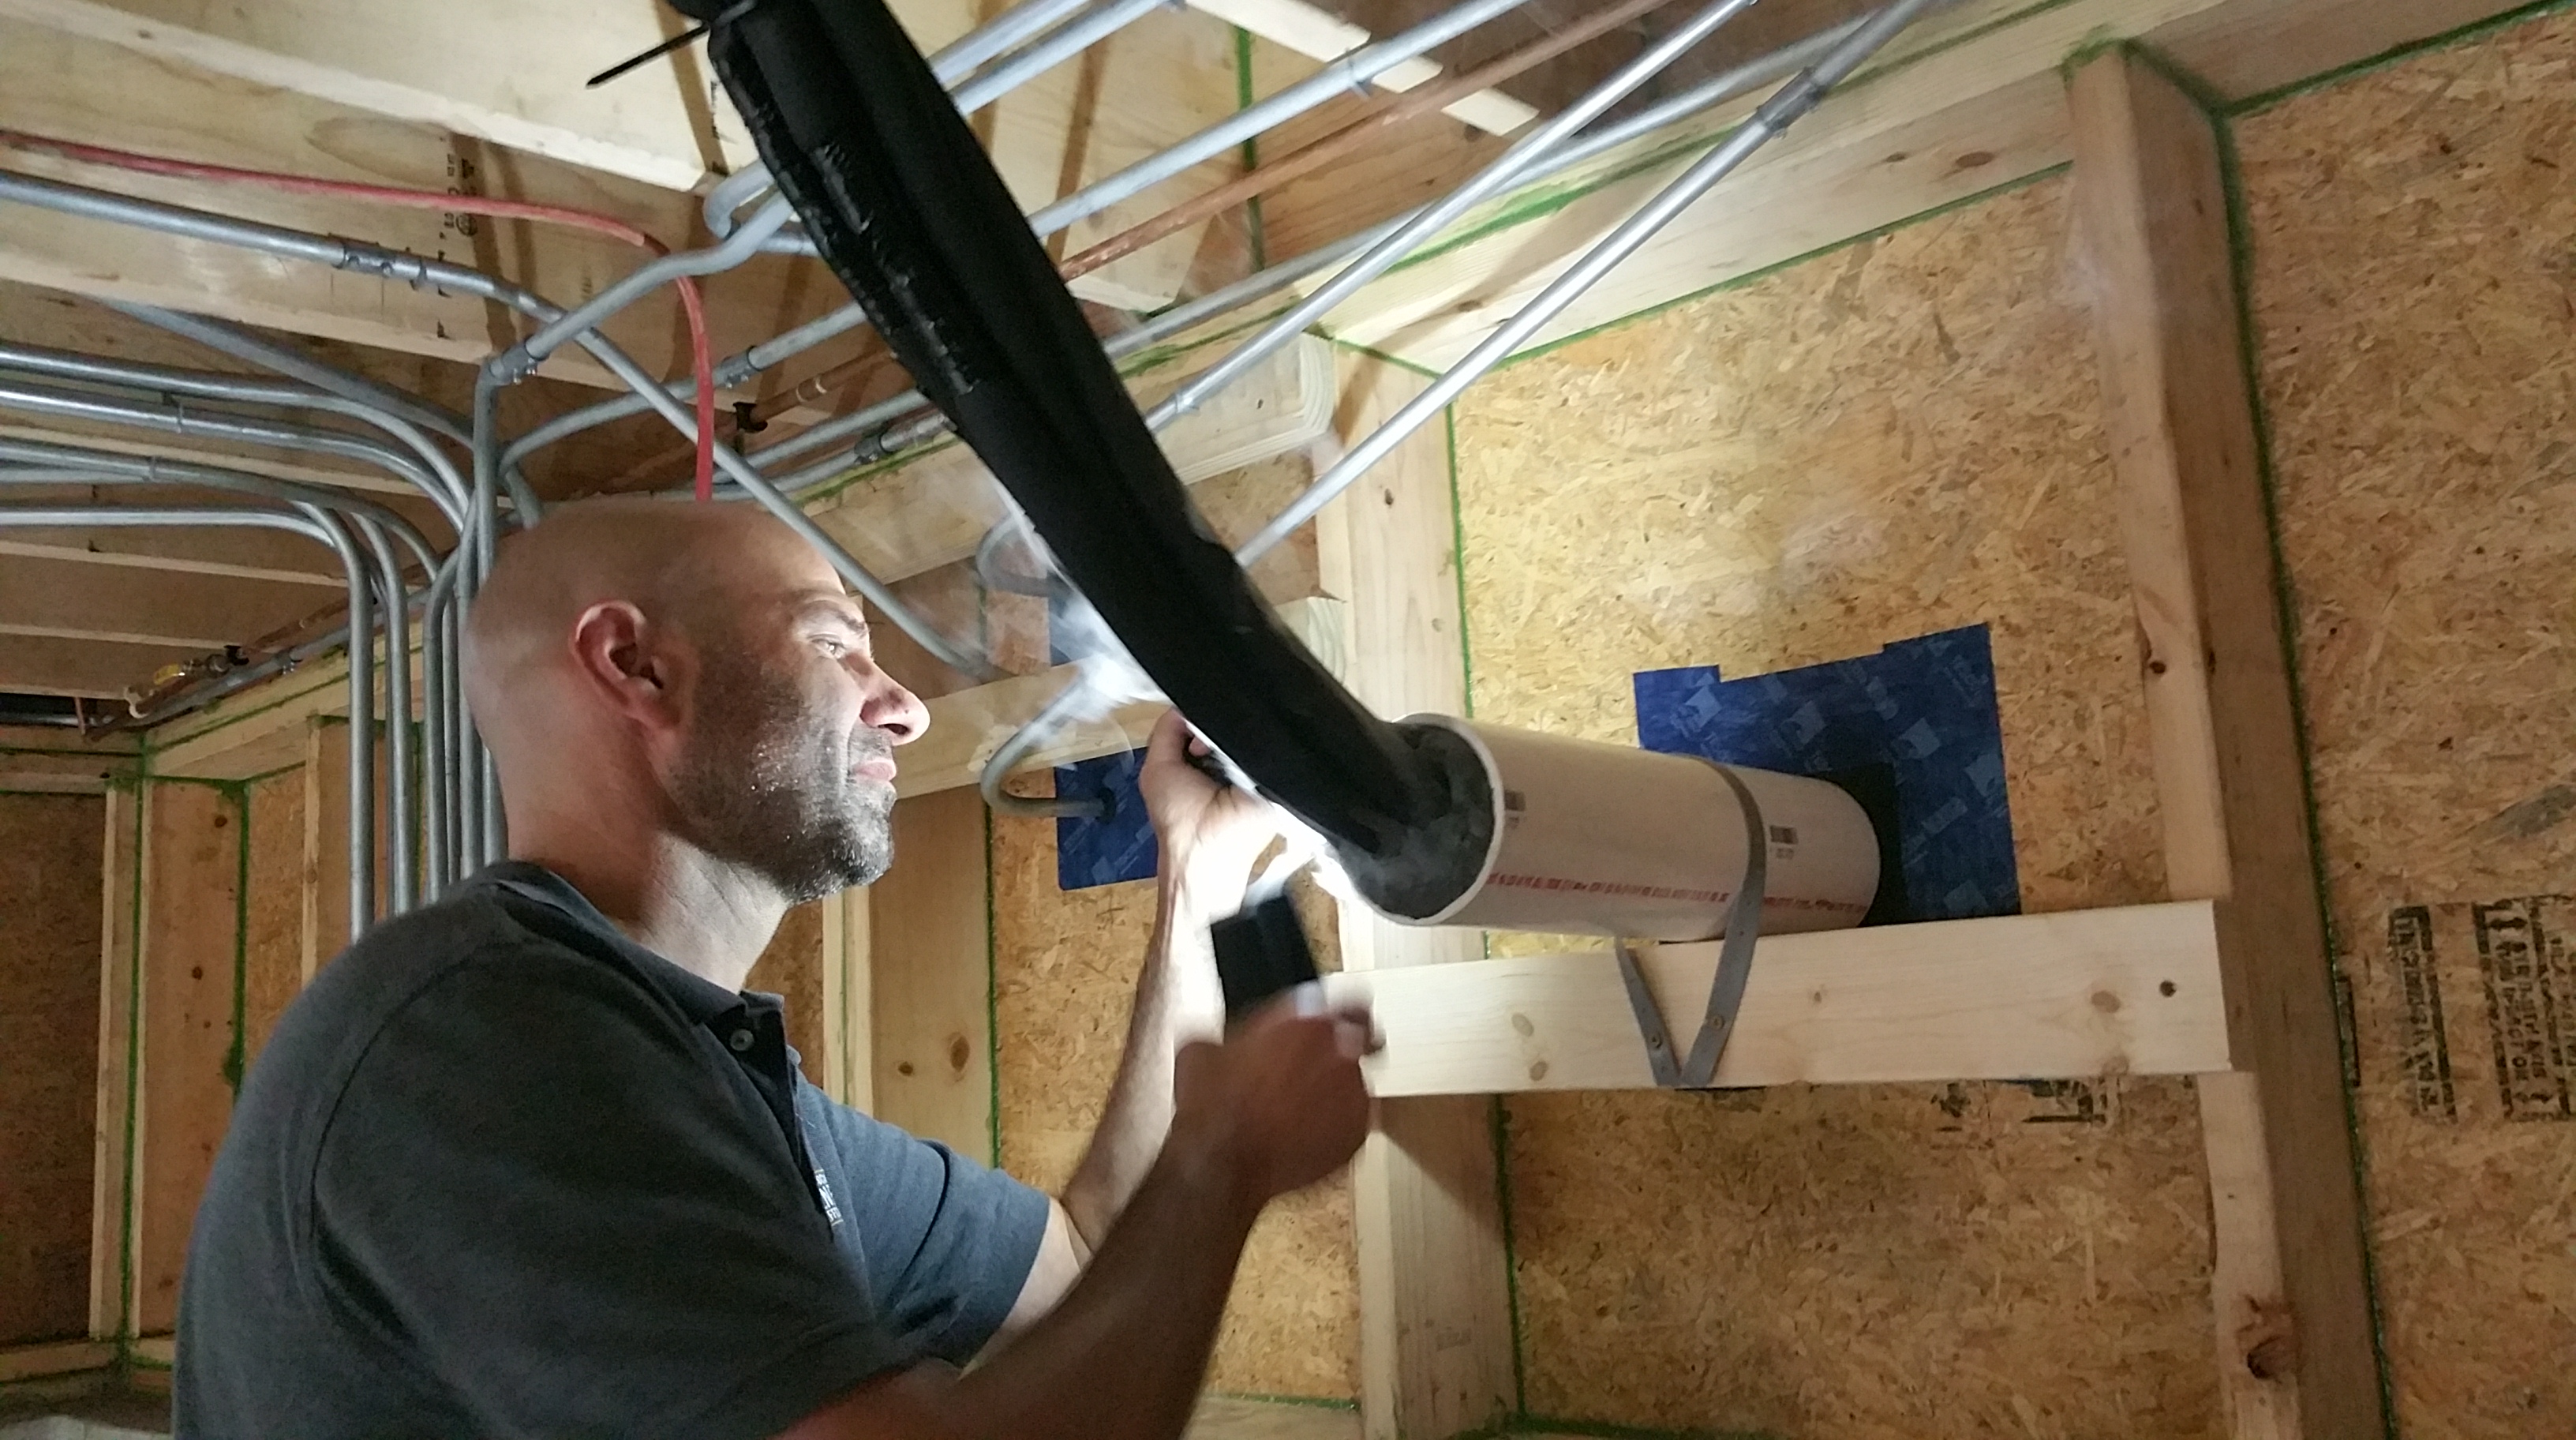 Steve testing for air leaks @ pvc:refrigerant lines